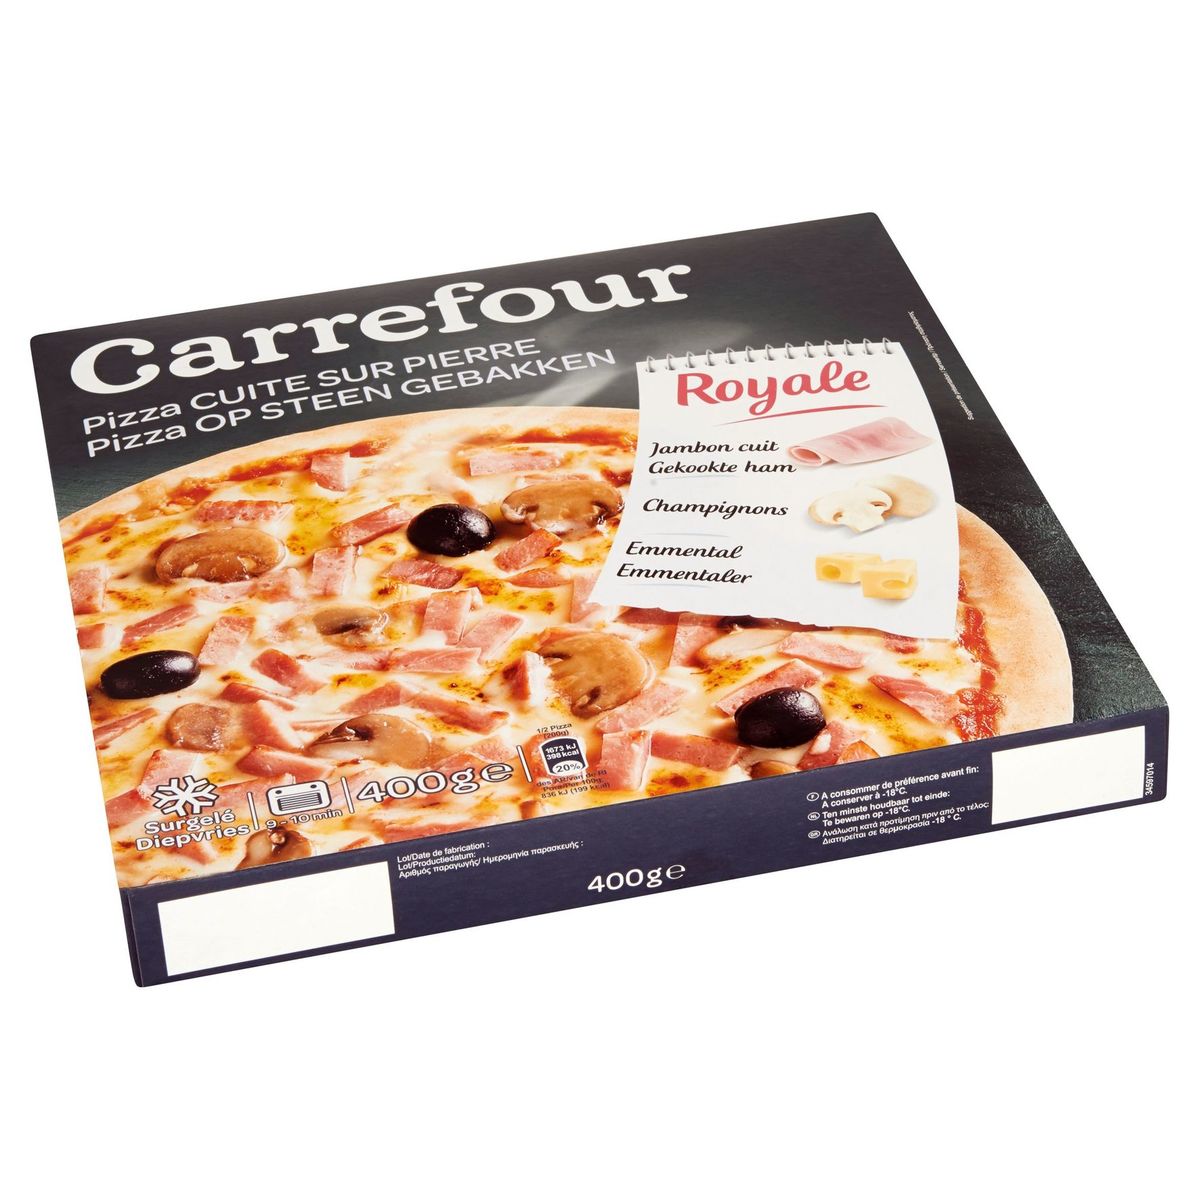 Carrefour Pizza op Steen Gebakken Royale 400 g